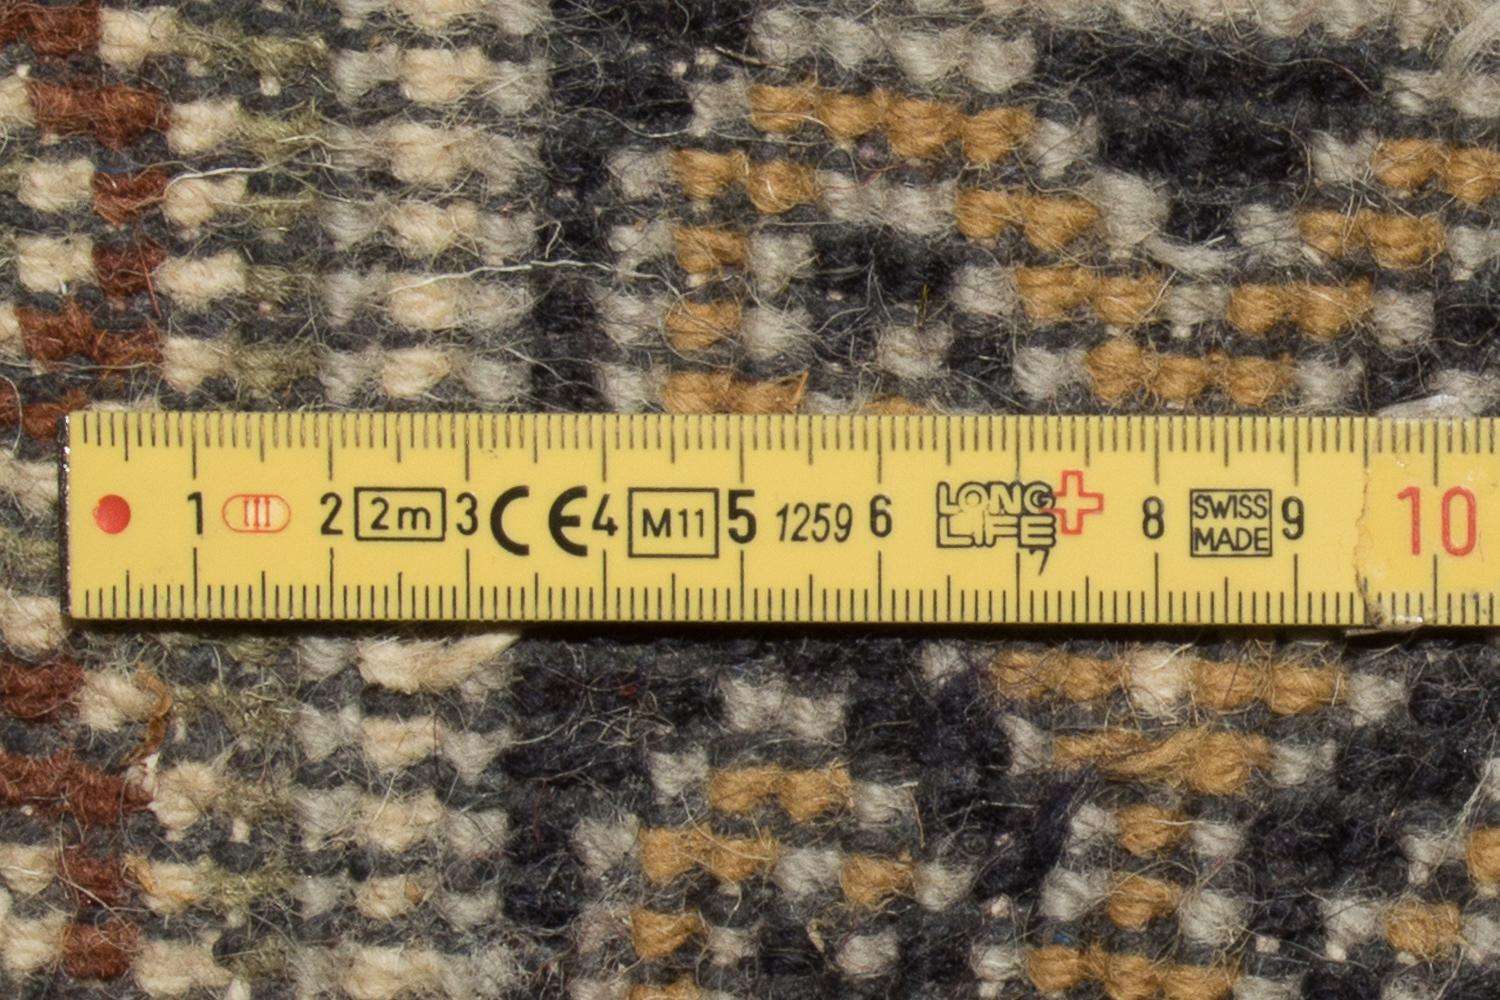 Orientální koberec - 154 x 91 cm - béžová